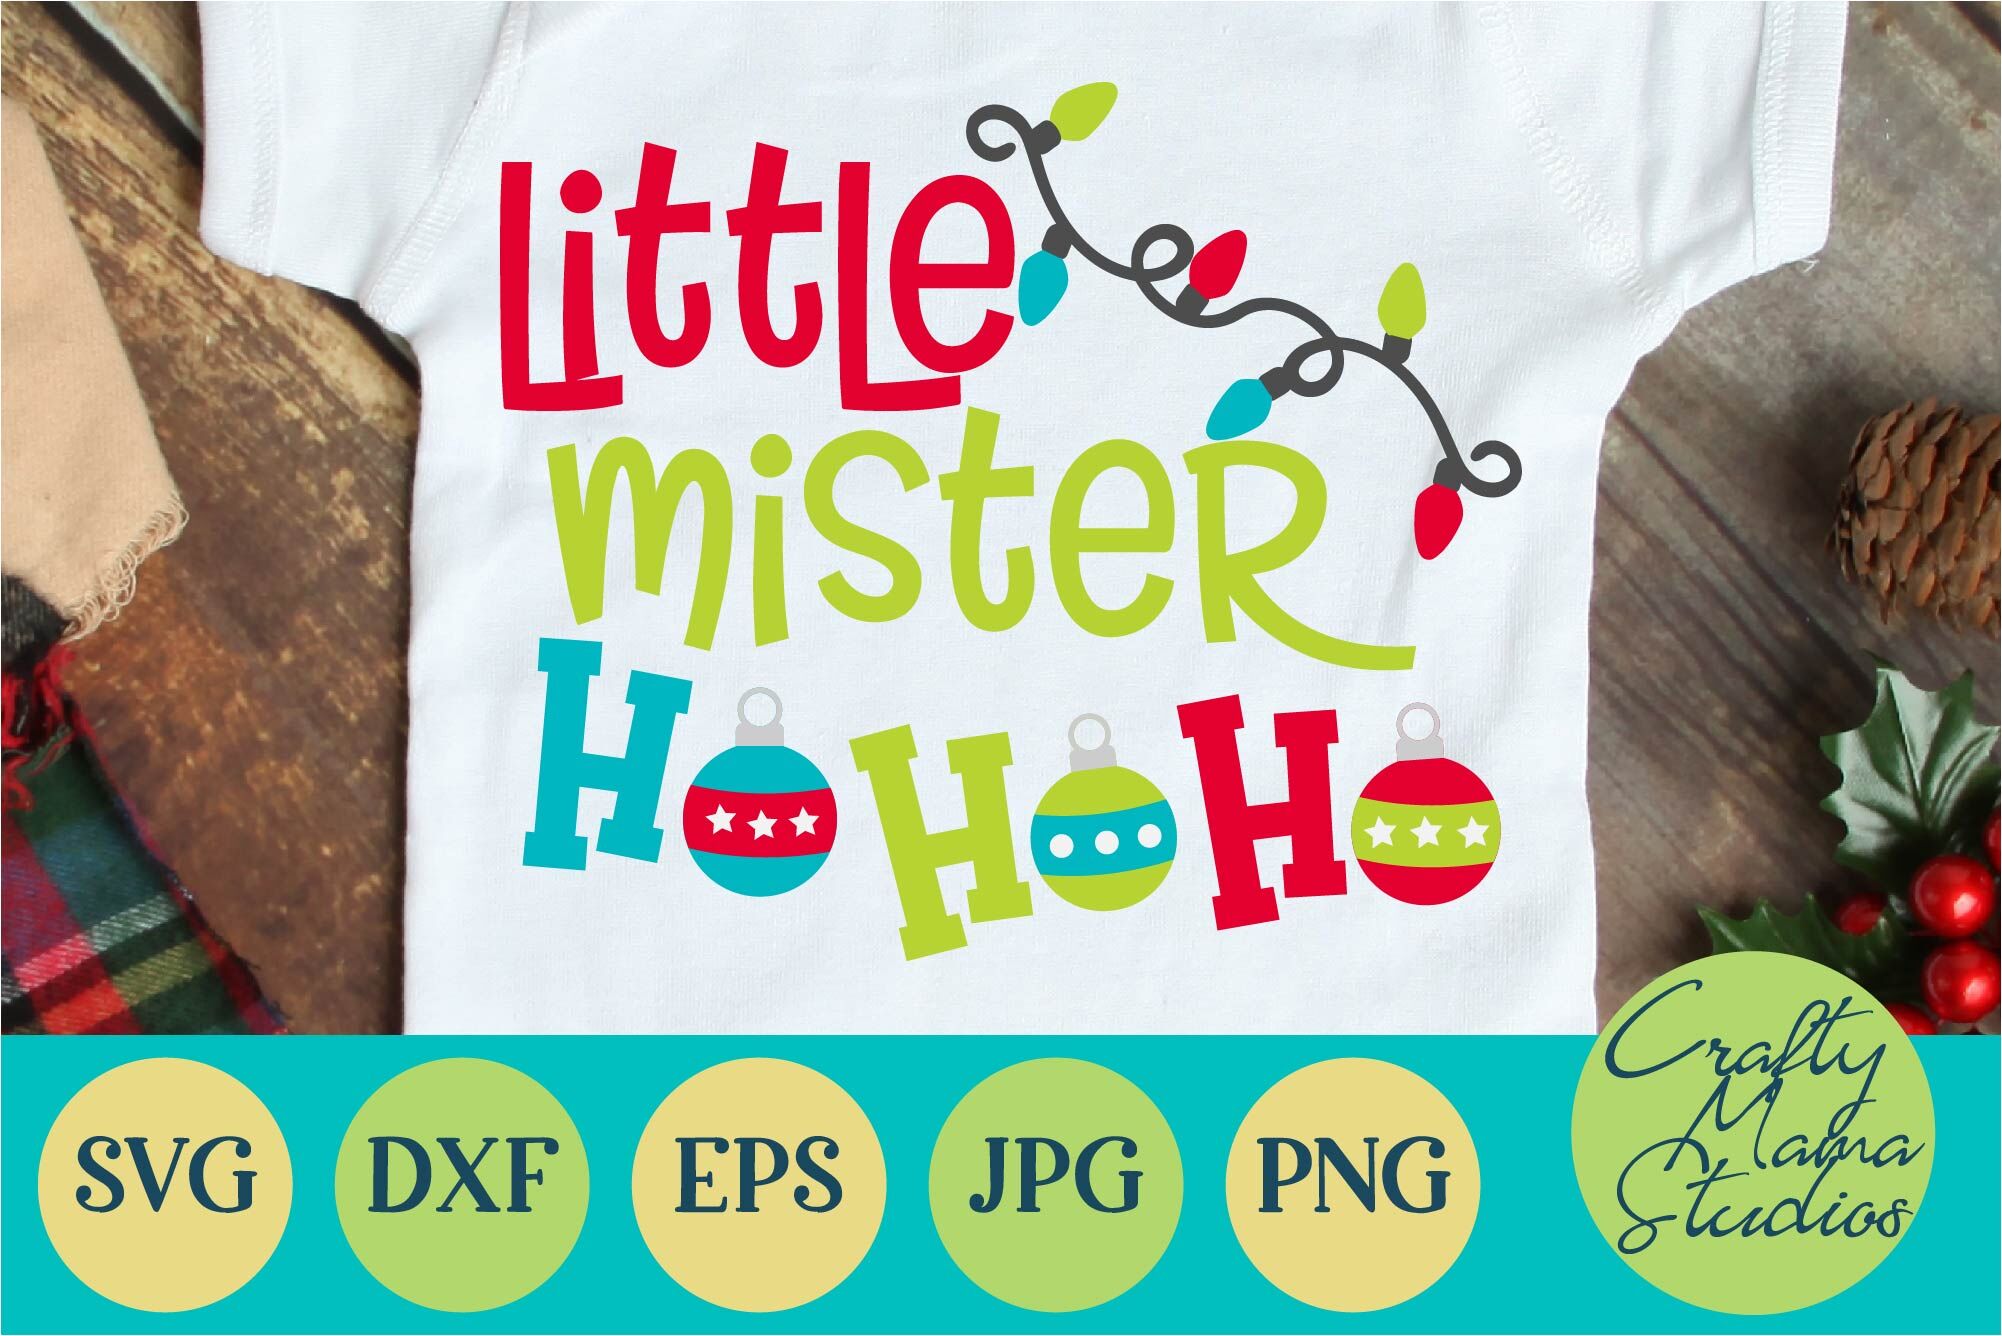 Little Mister Ho Ho Ho Svg Baby Christmas Svg By Crafty Mama Studios Thehungryjpeg Com